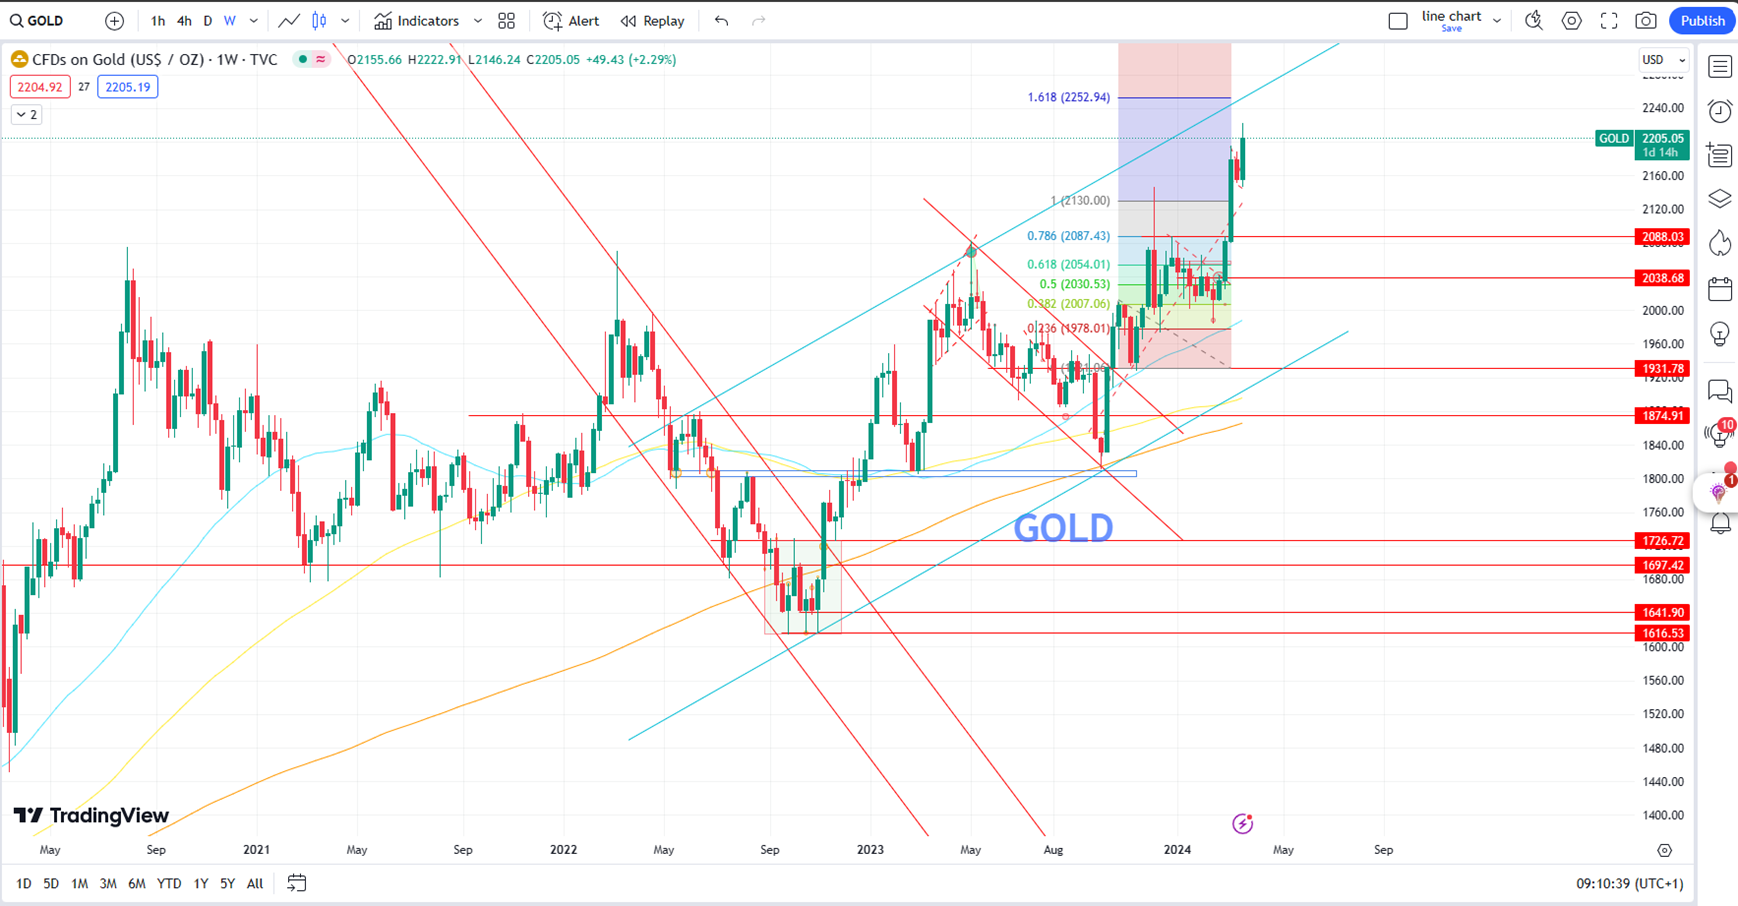 Gold Surges Towards 2250 Target on Weaker Dollar